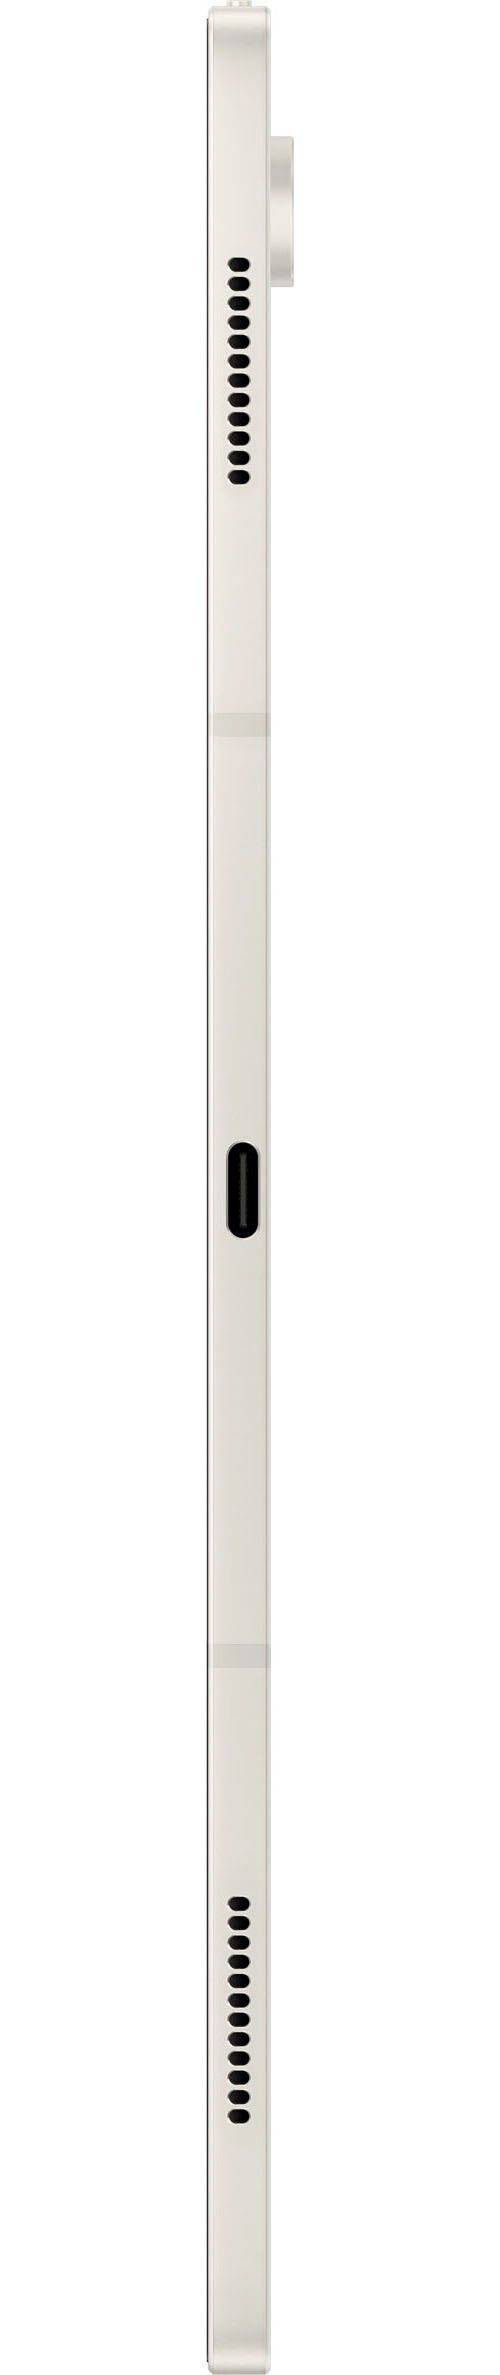 Samsung Galaxy Android) GB, (14,6", beige WiFi Tab 512 Ultra Tablet S9